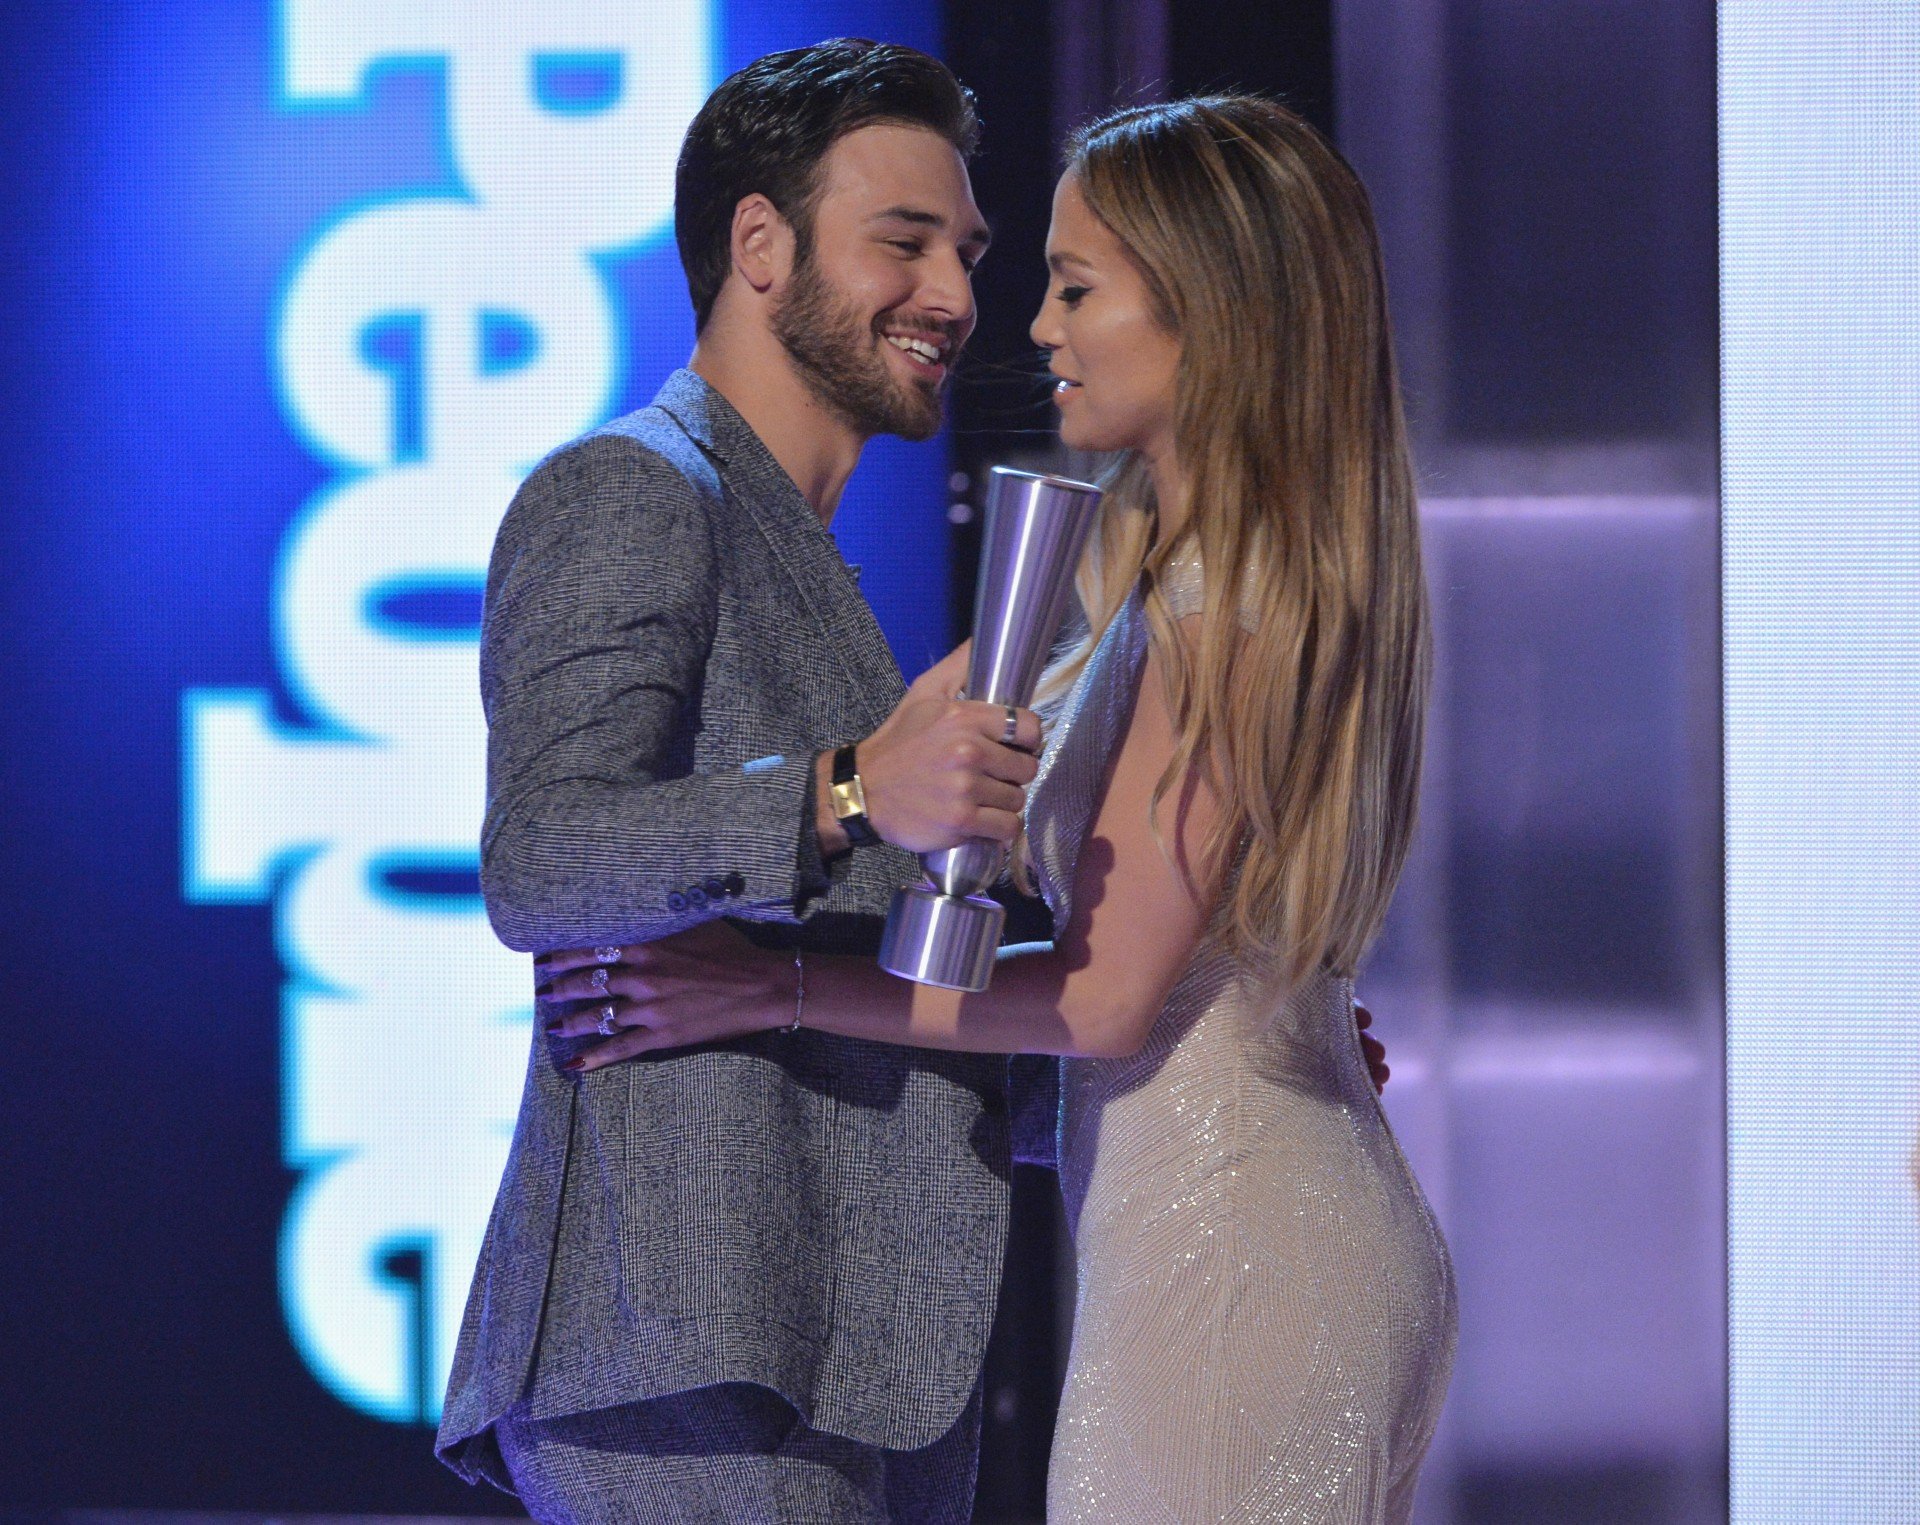 Ryan Guzman and Jennifer Lopez embrace during an awards show